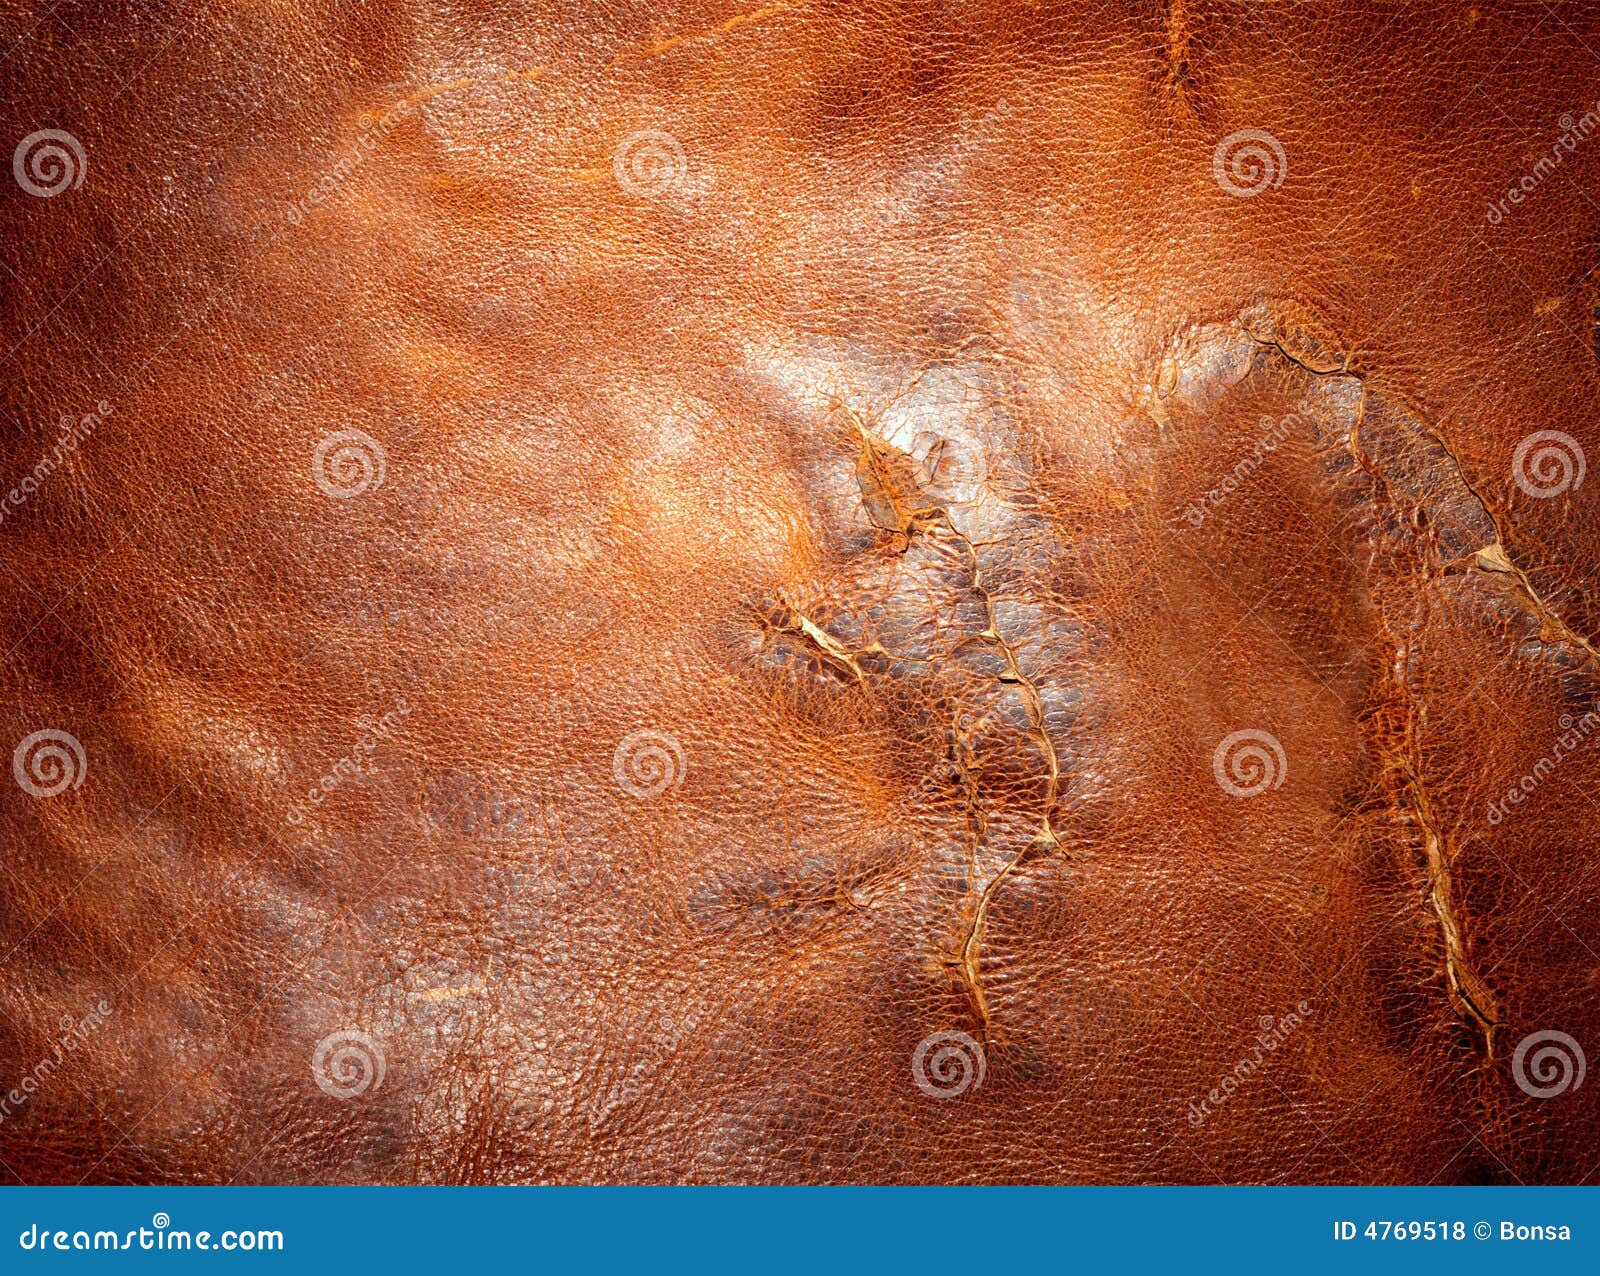 Tattered leather stock photo. Image of noise, antique - 4769518